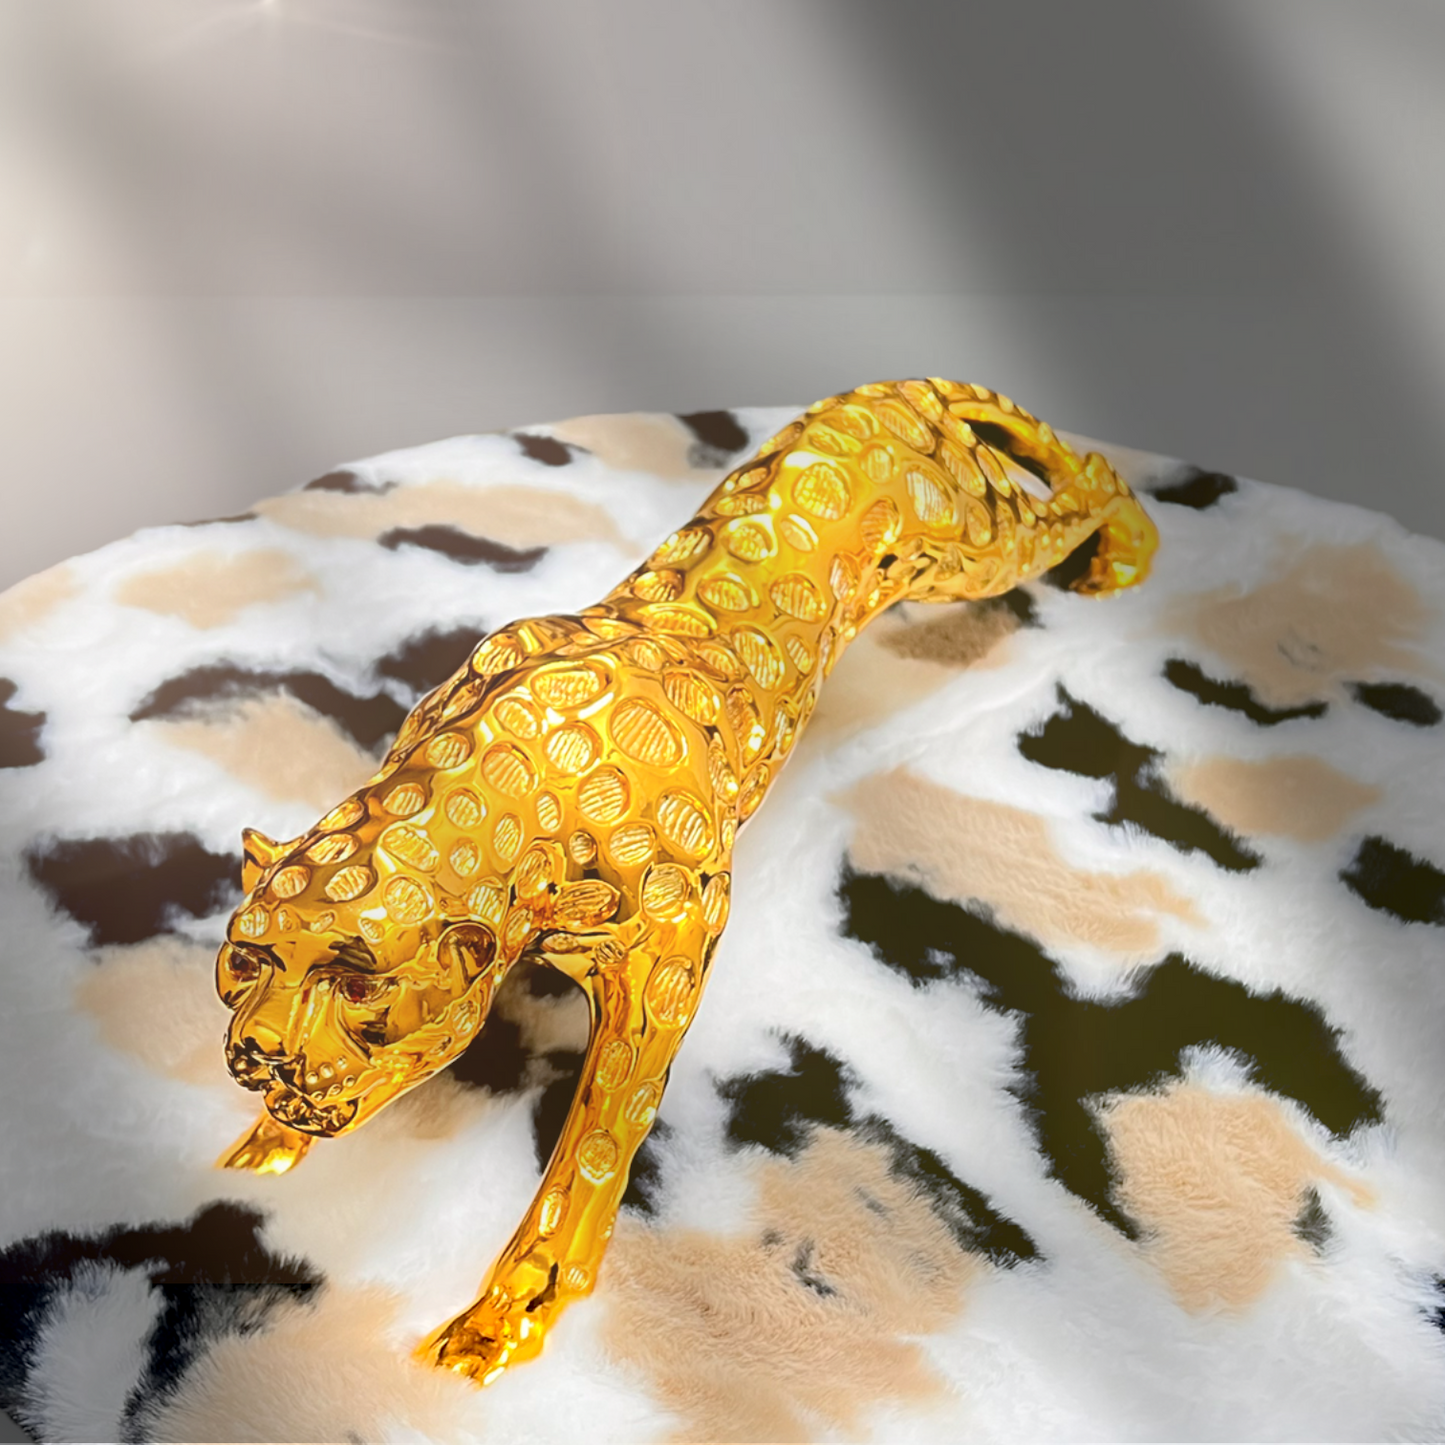 The Golden Jaguar